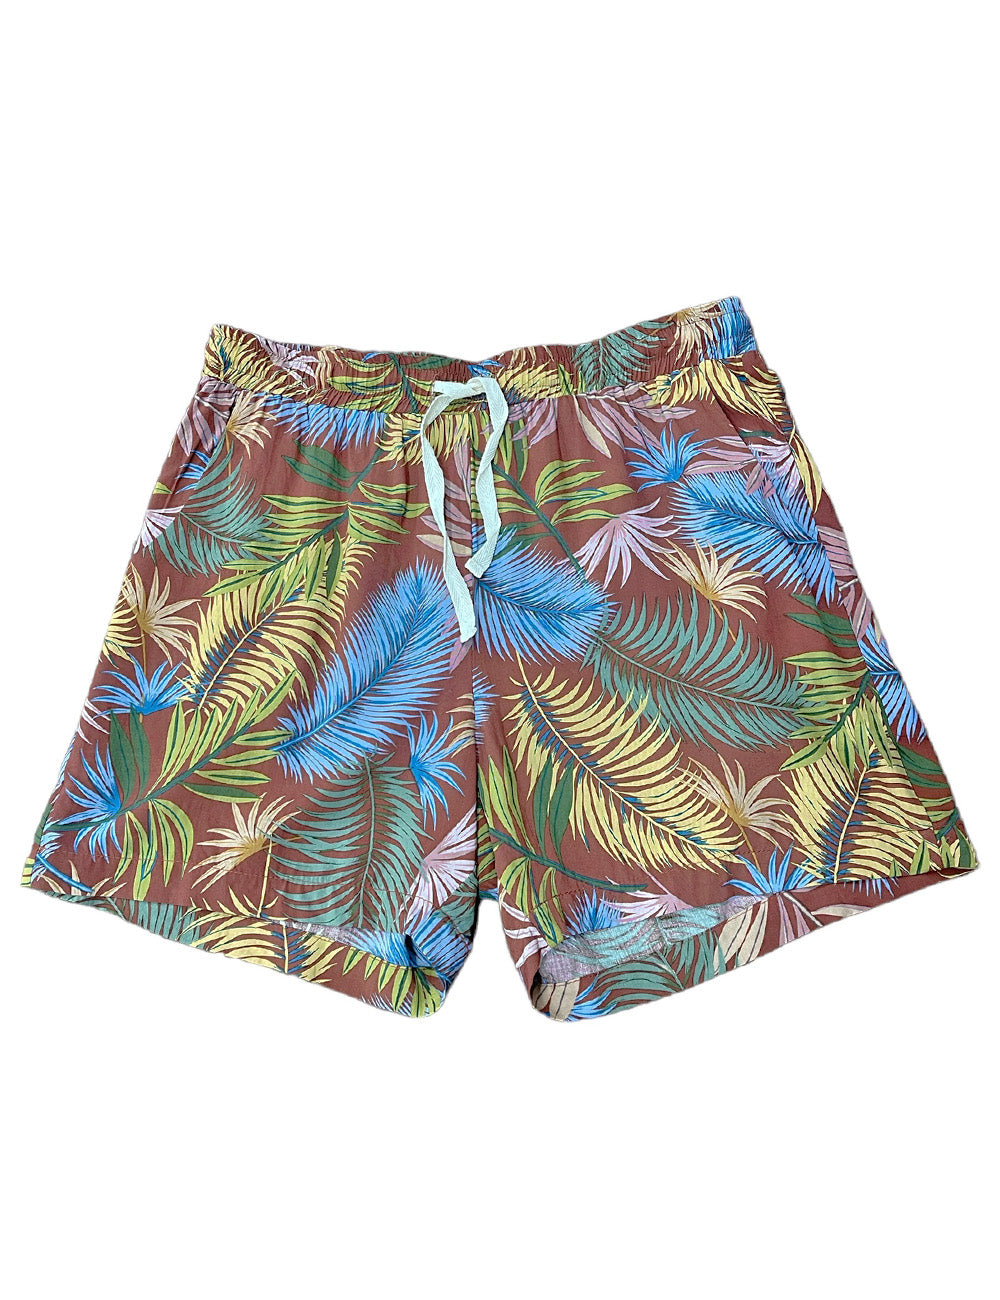 Brown Tropical Fern Print Mens Unisex Retro Cabana Shorts